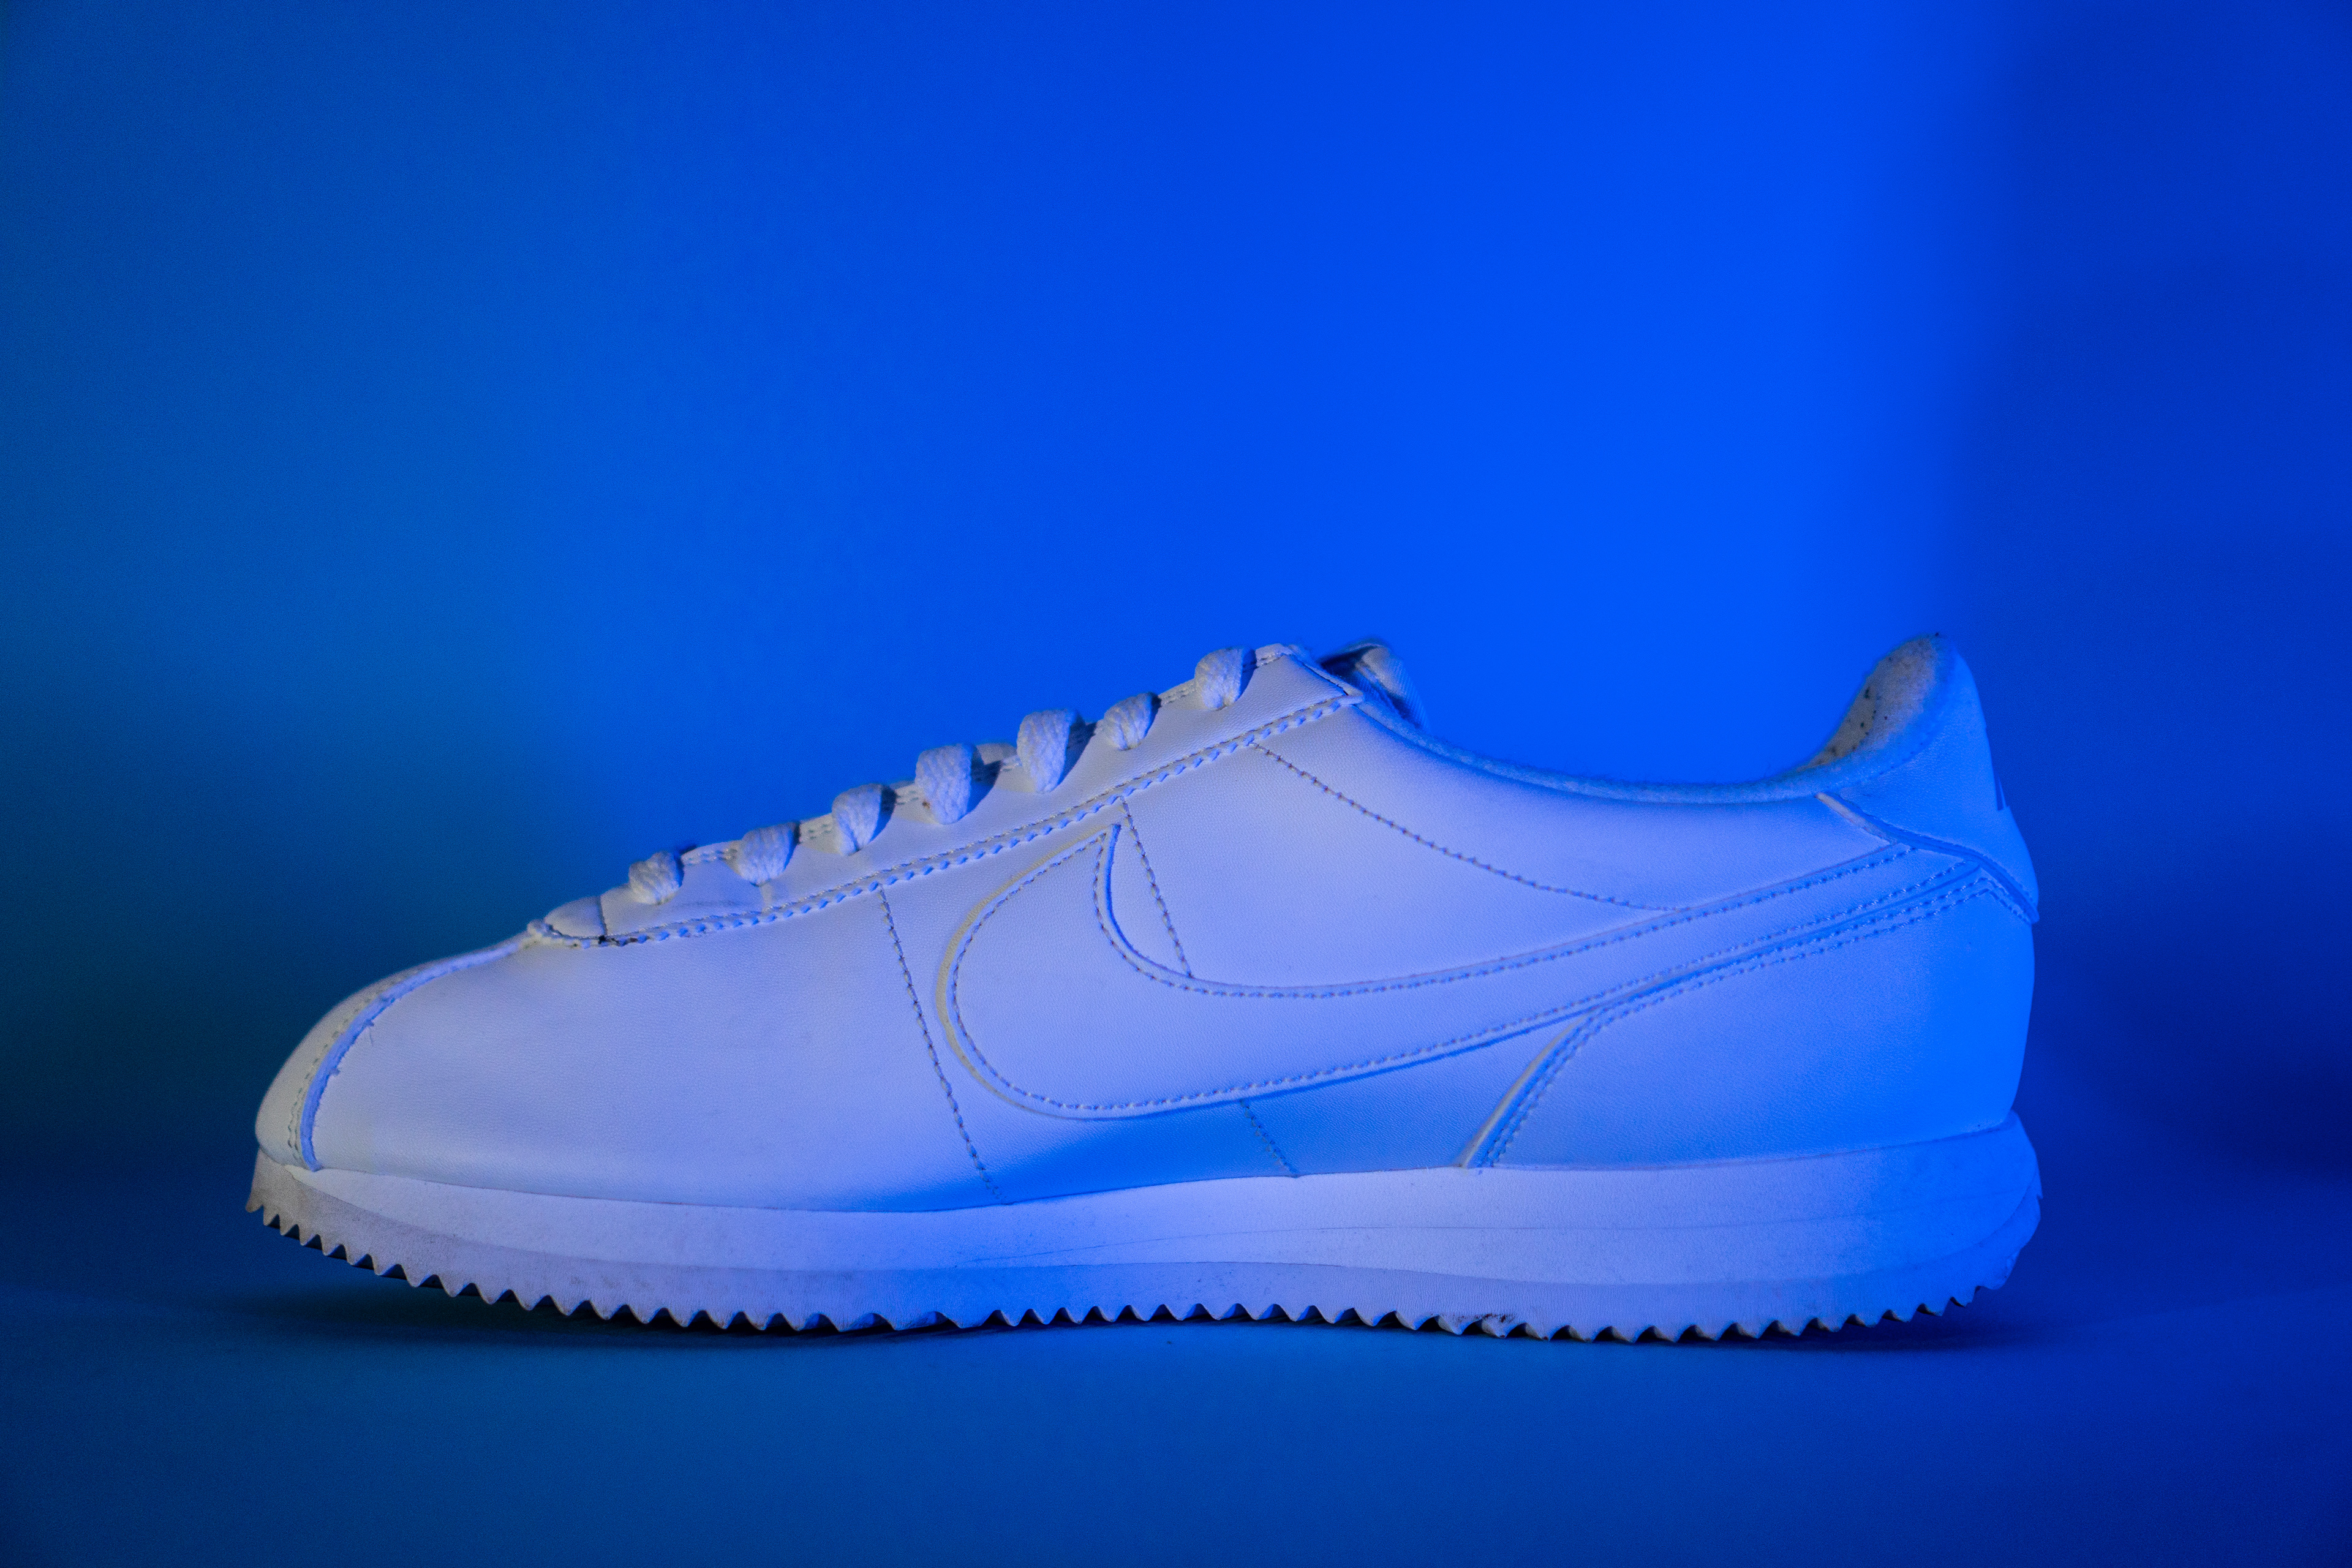 File:Nike cortez blue.gif - Wikimedia Commons